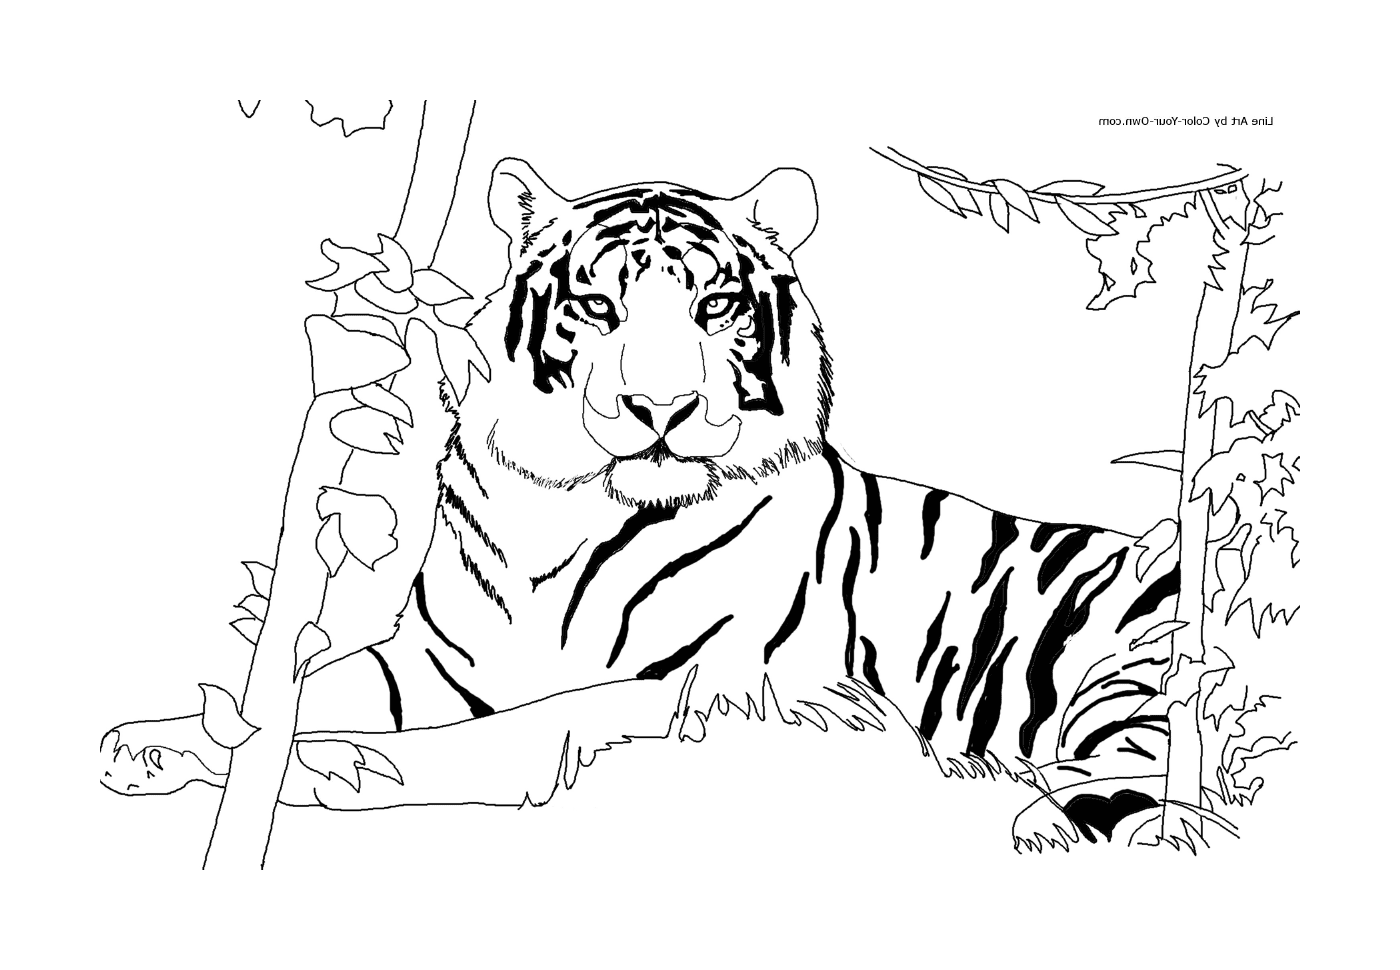  Um tigre africano em seu habitat 